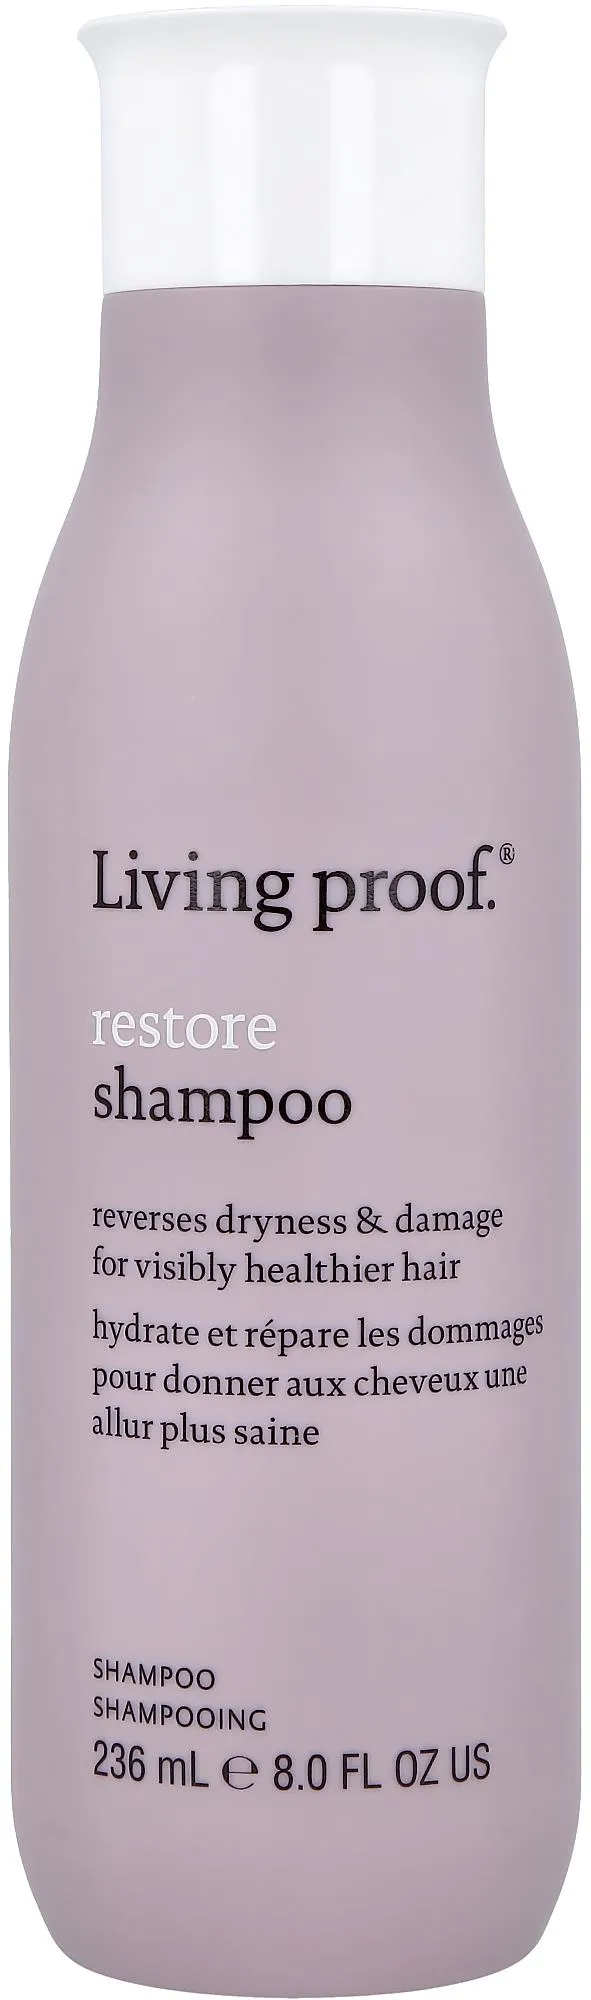 FEMMENORDIC's choice in the Olaplex vs Living Proof shampoo comparison, Living Proof Restore Shampoo